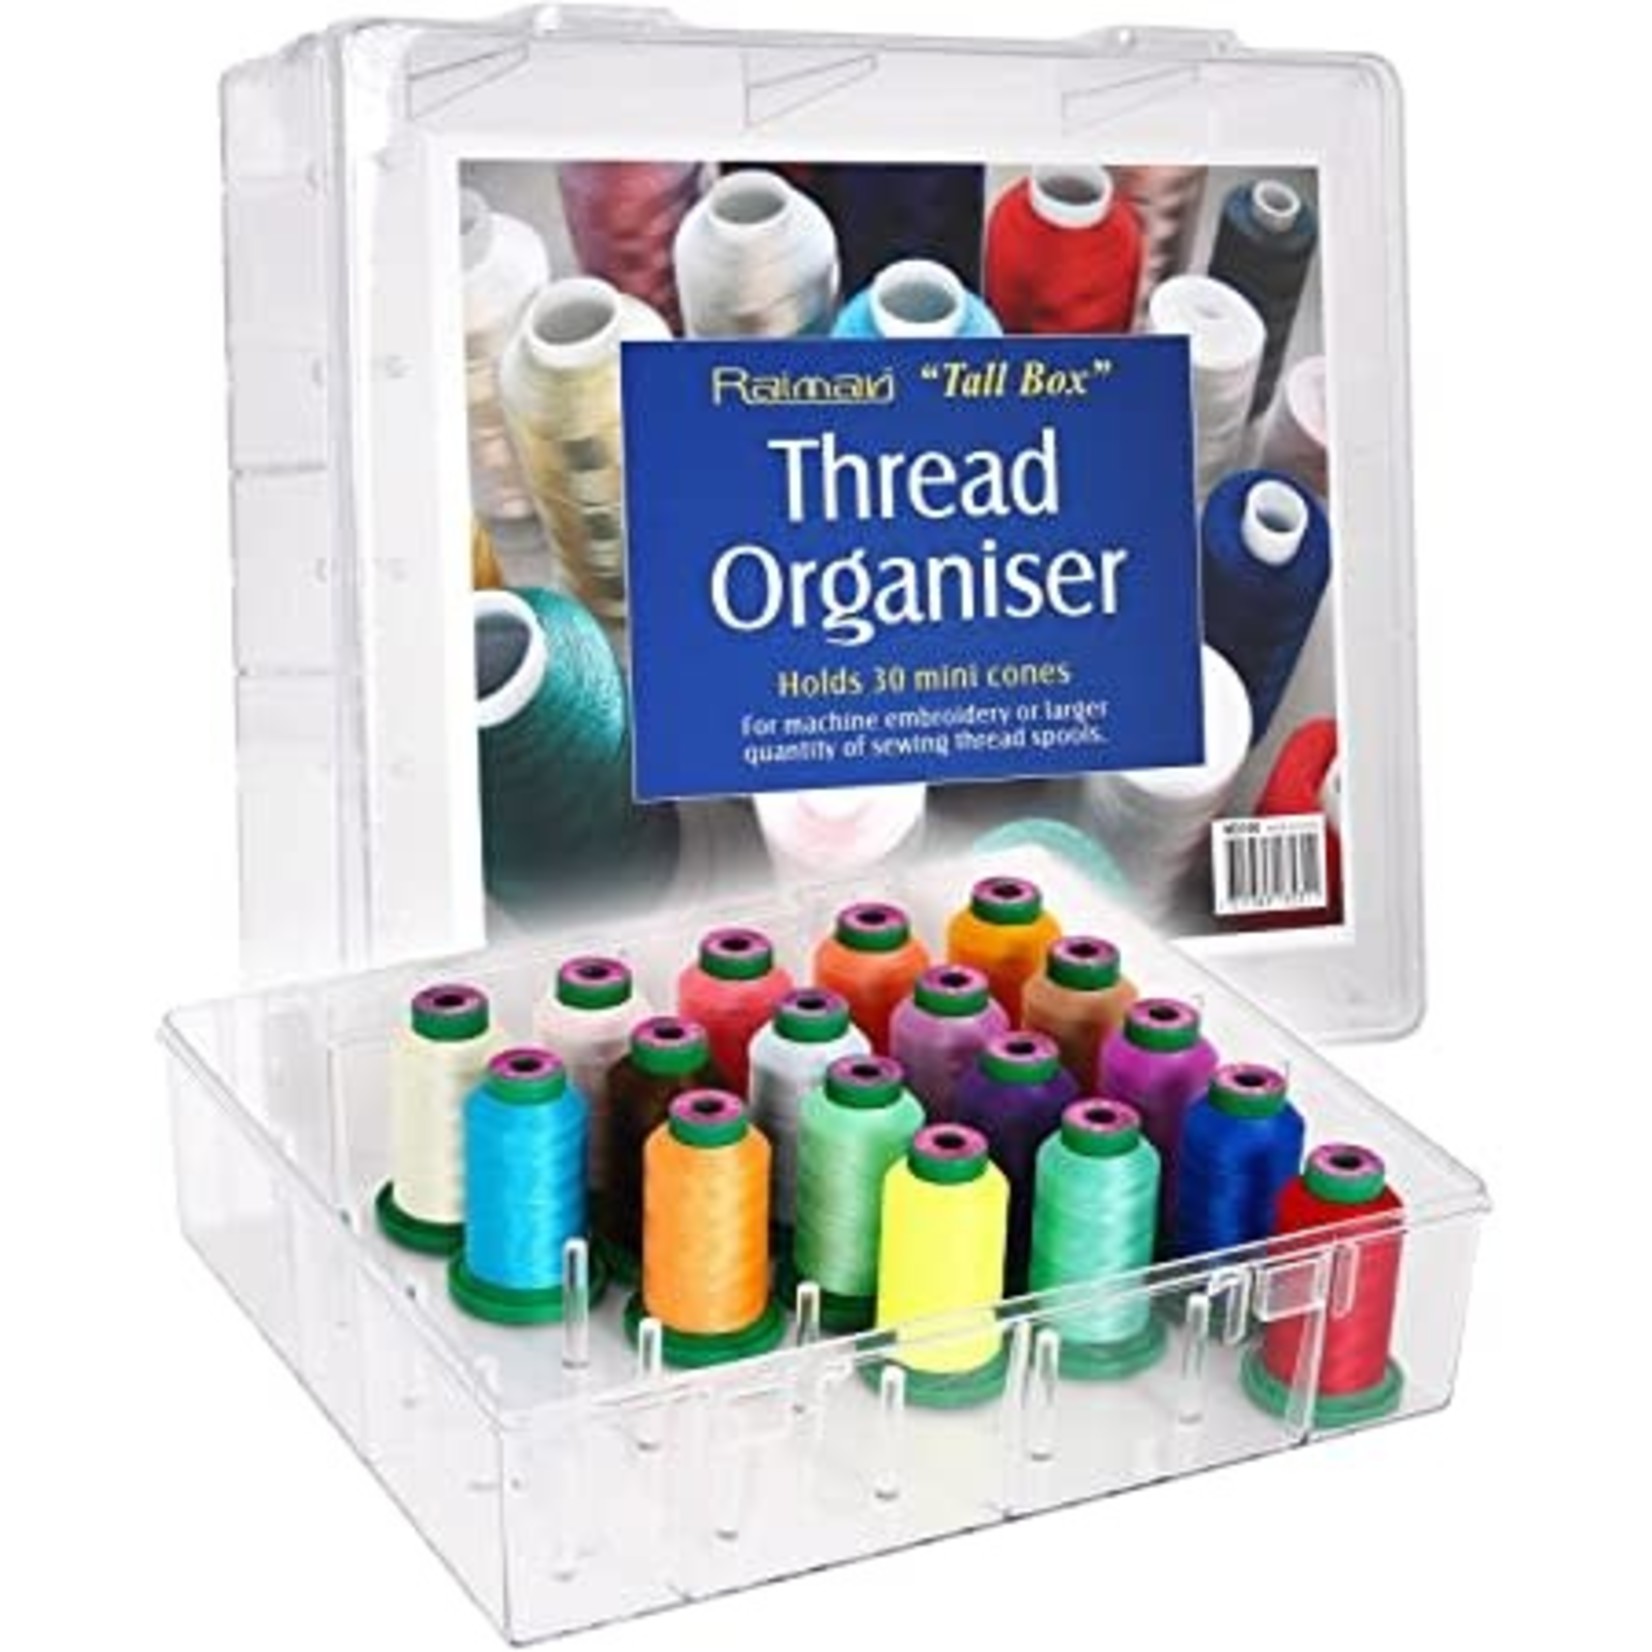 Hemline Machine Embroidery Thread Organizer (holds 30 spools)